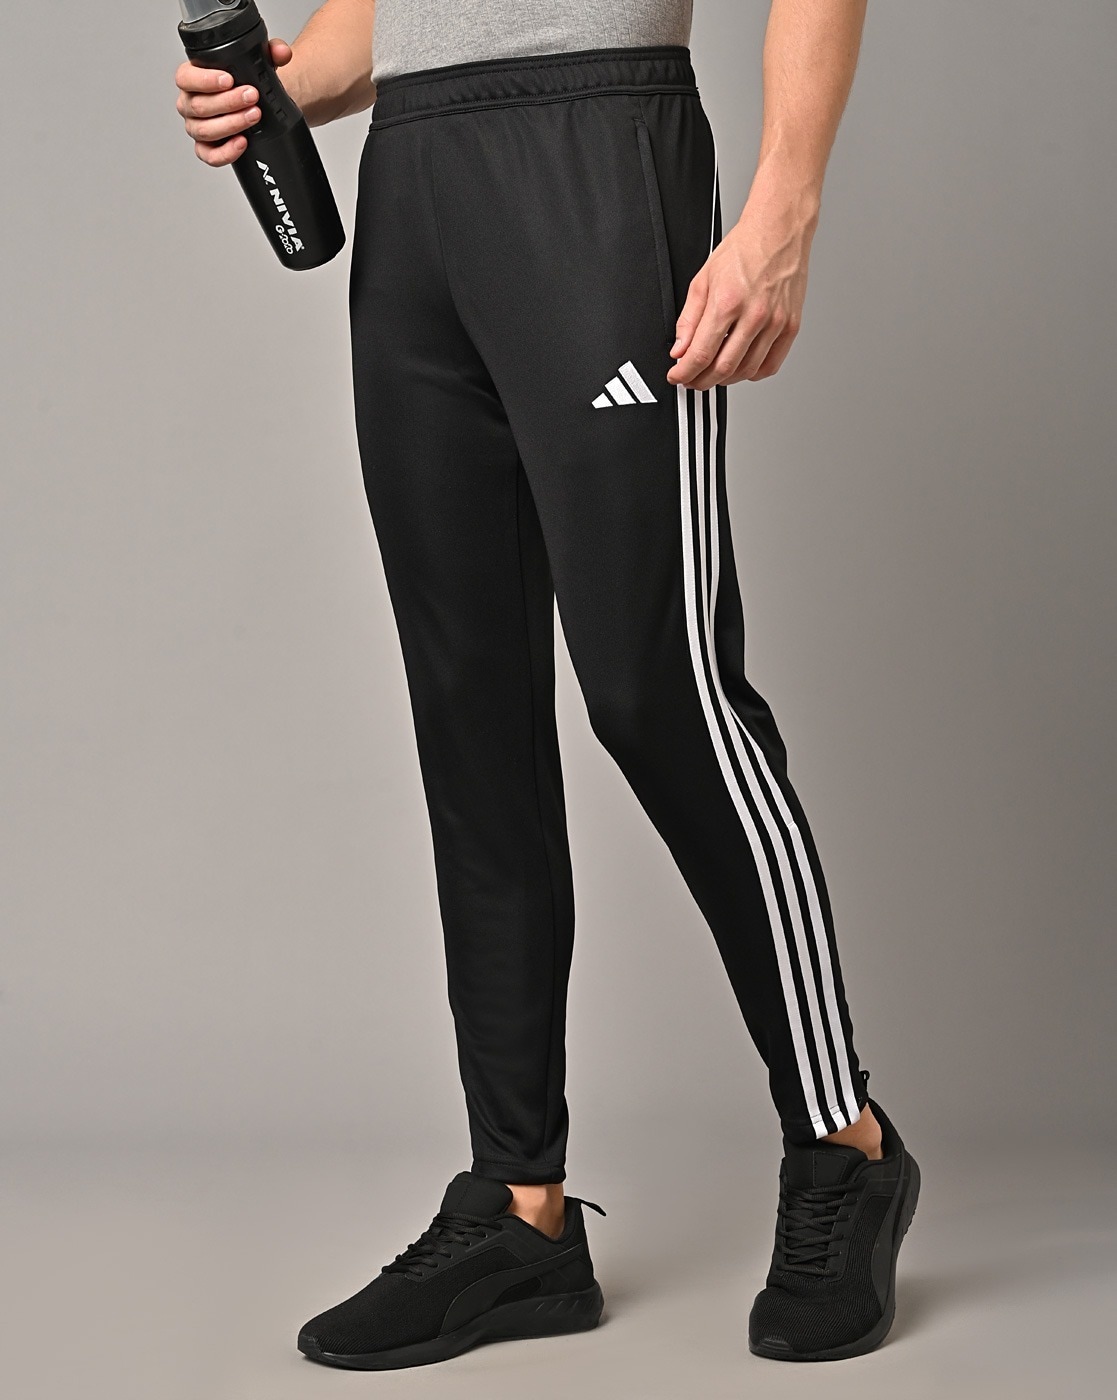 Share 139+ adidas track pants skinny womens latest